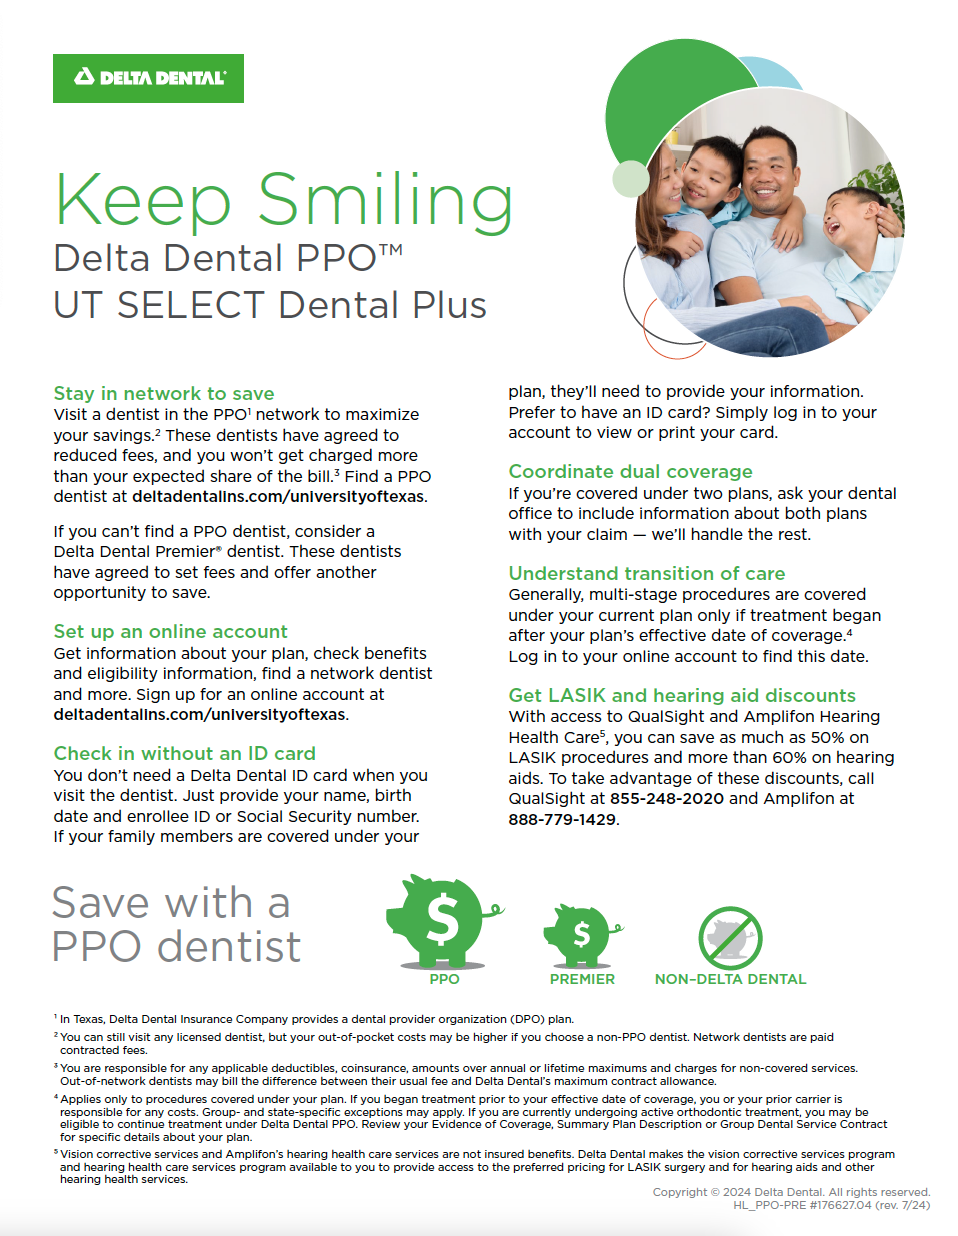 UT SELECT Dental Plus cover sheet